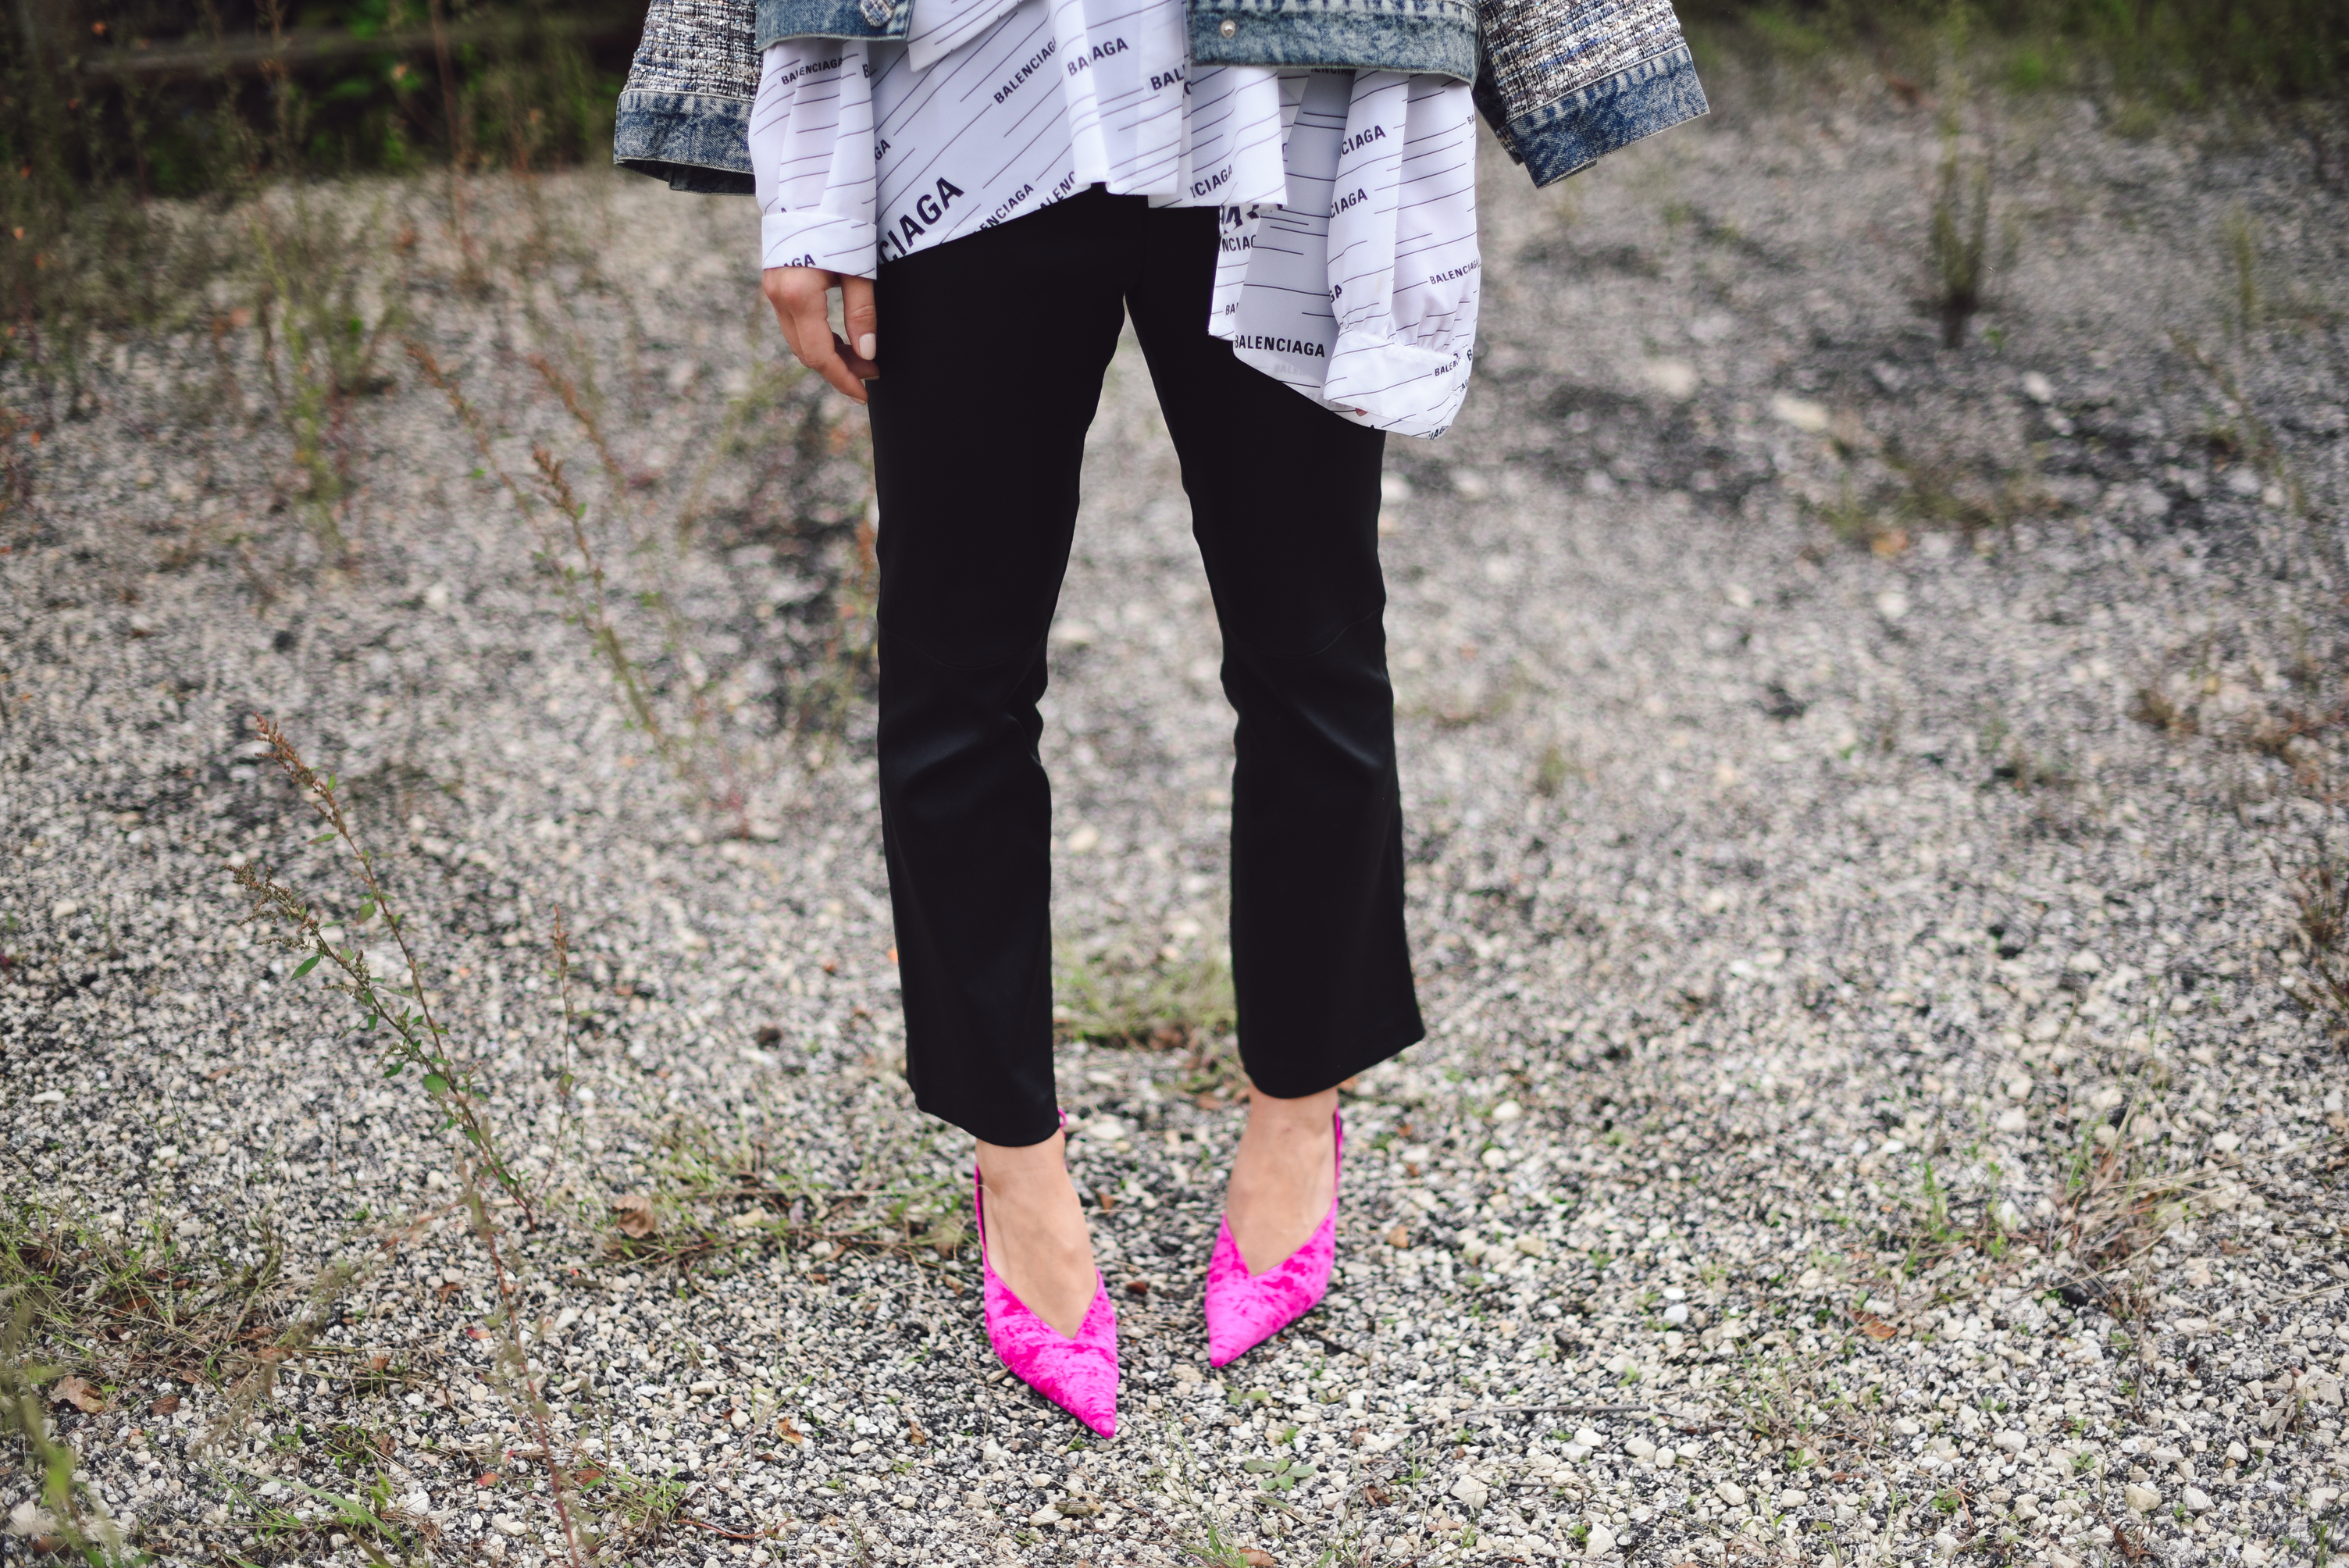 balenciaga-shirt-leather-pants-pink-pump-sparkle-jean-jacket-street-style-outfit